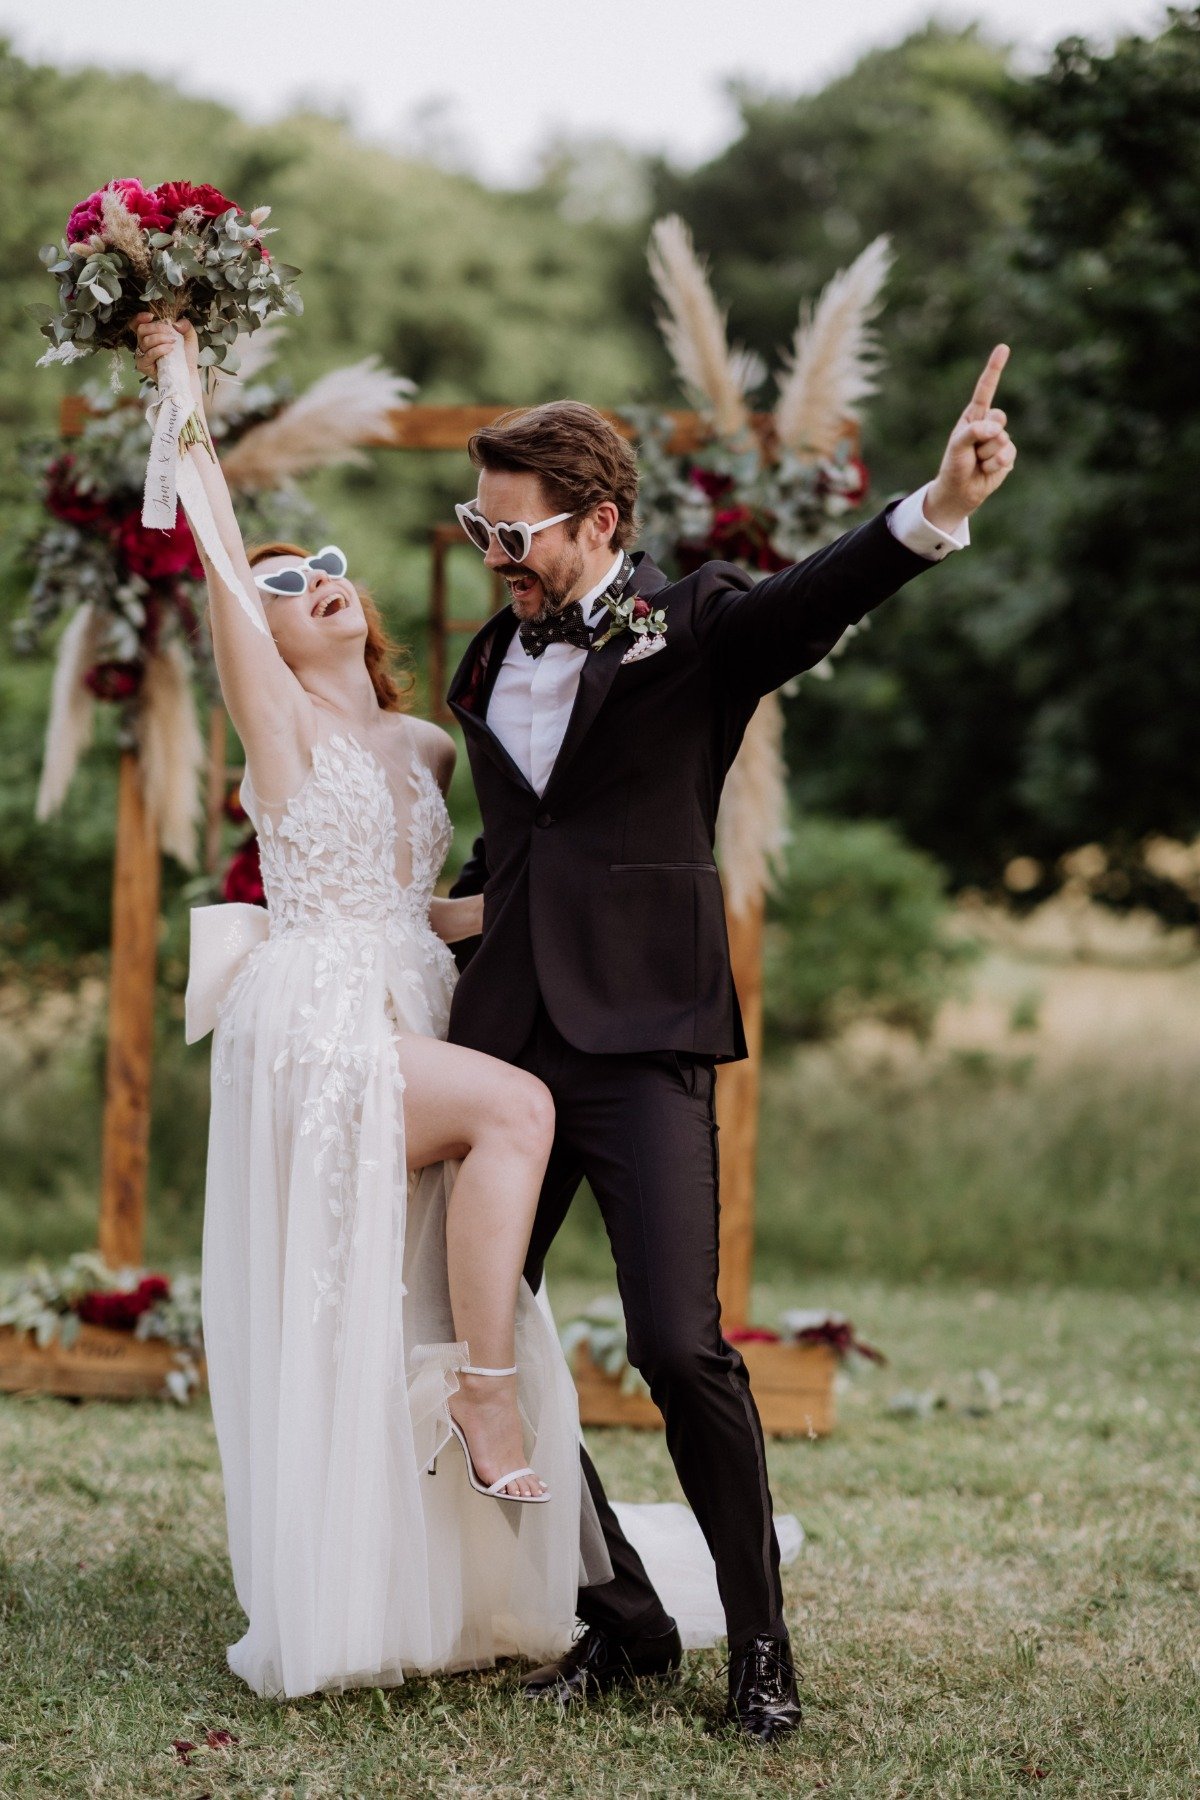 Sample Ceremony Scripts You'll Want - Weddingchicks